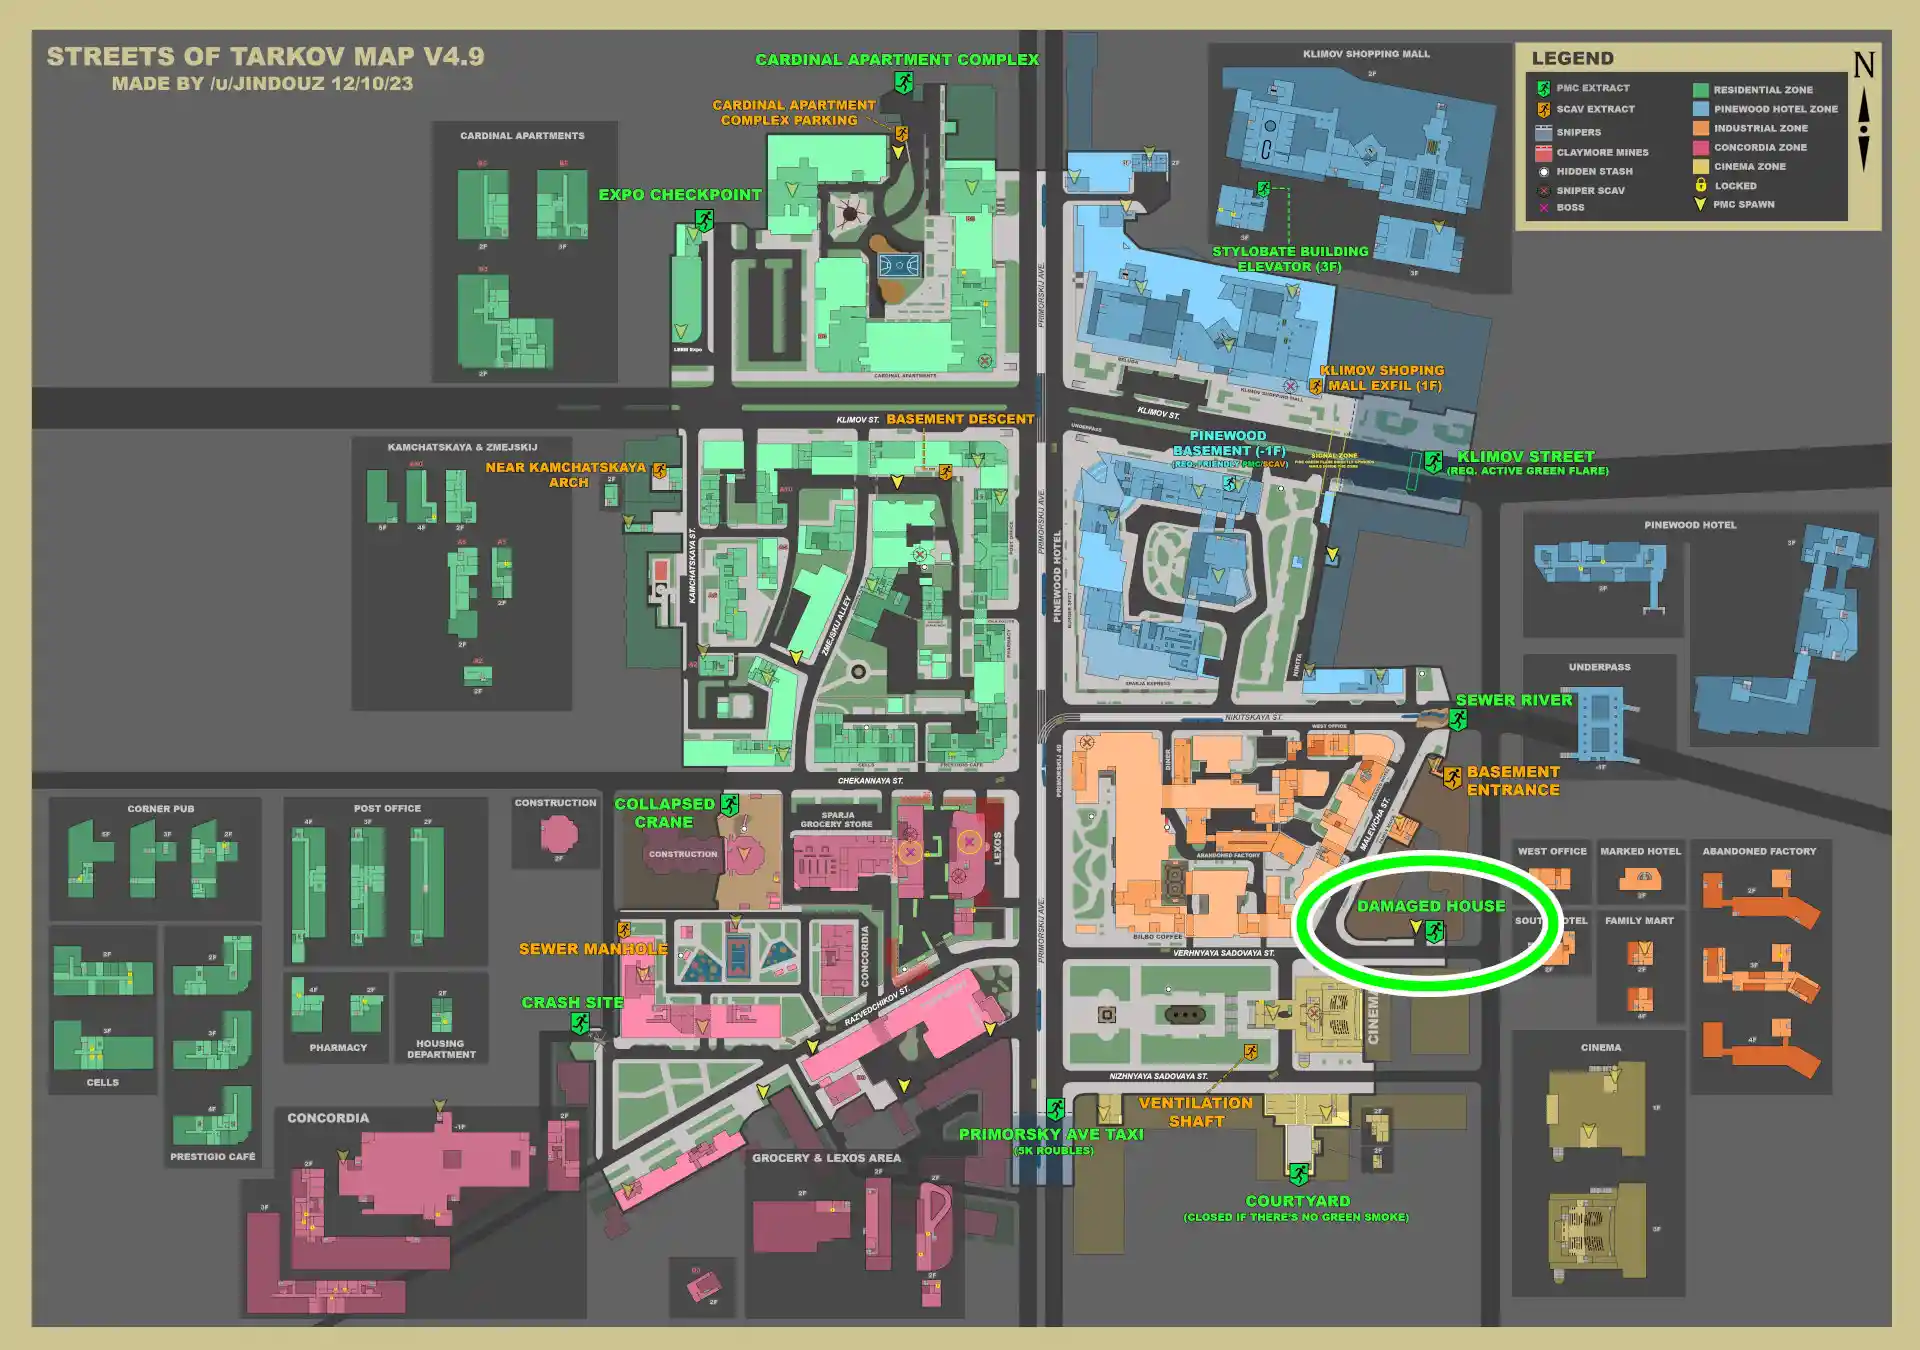 STREETS_OF_TARKOV-ESC-Damaged_House-MAP.jpg